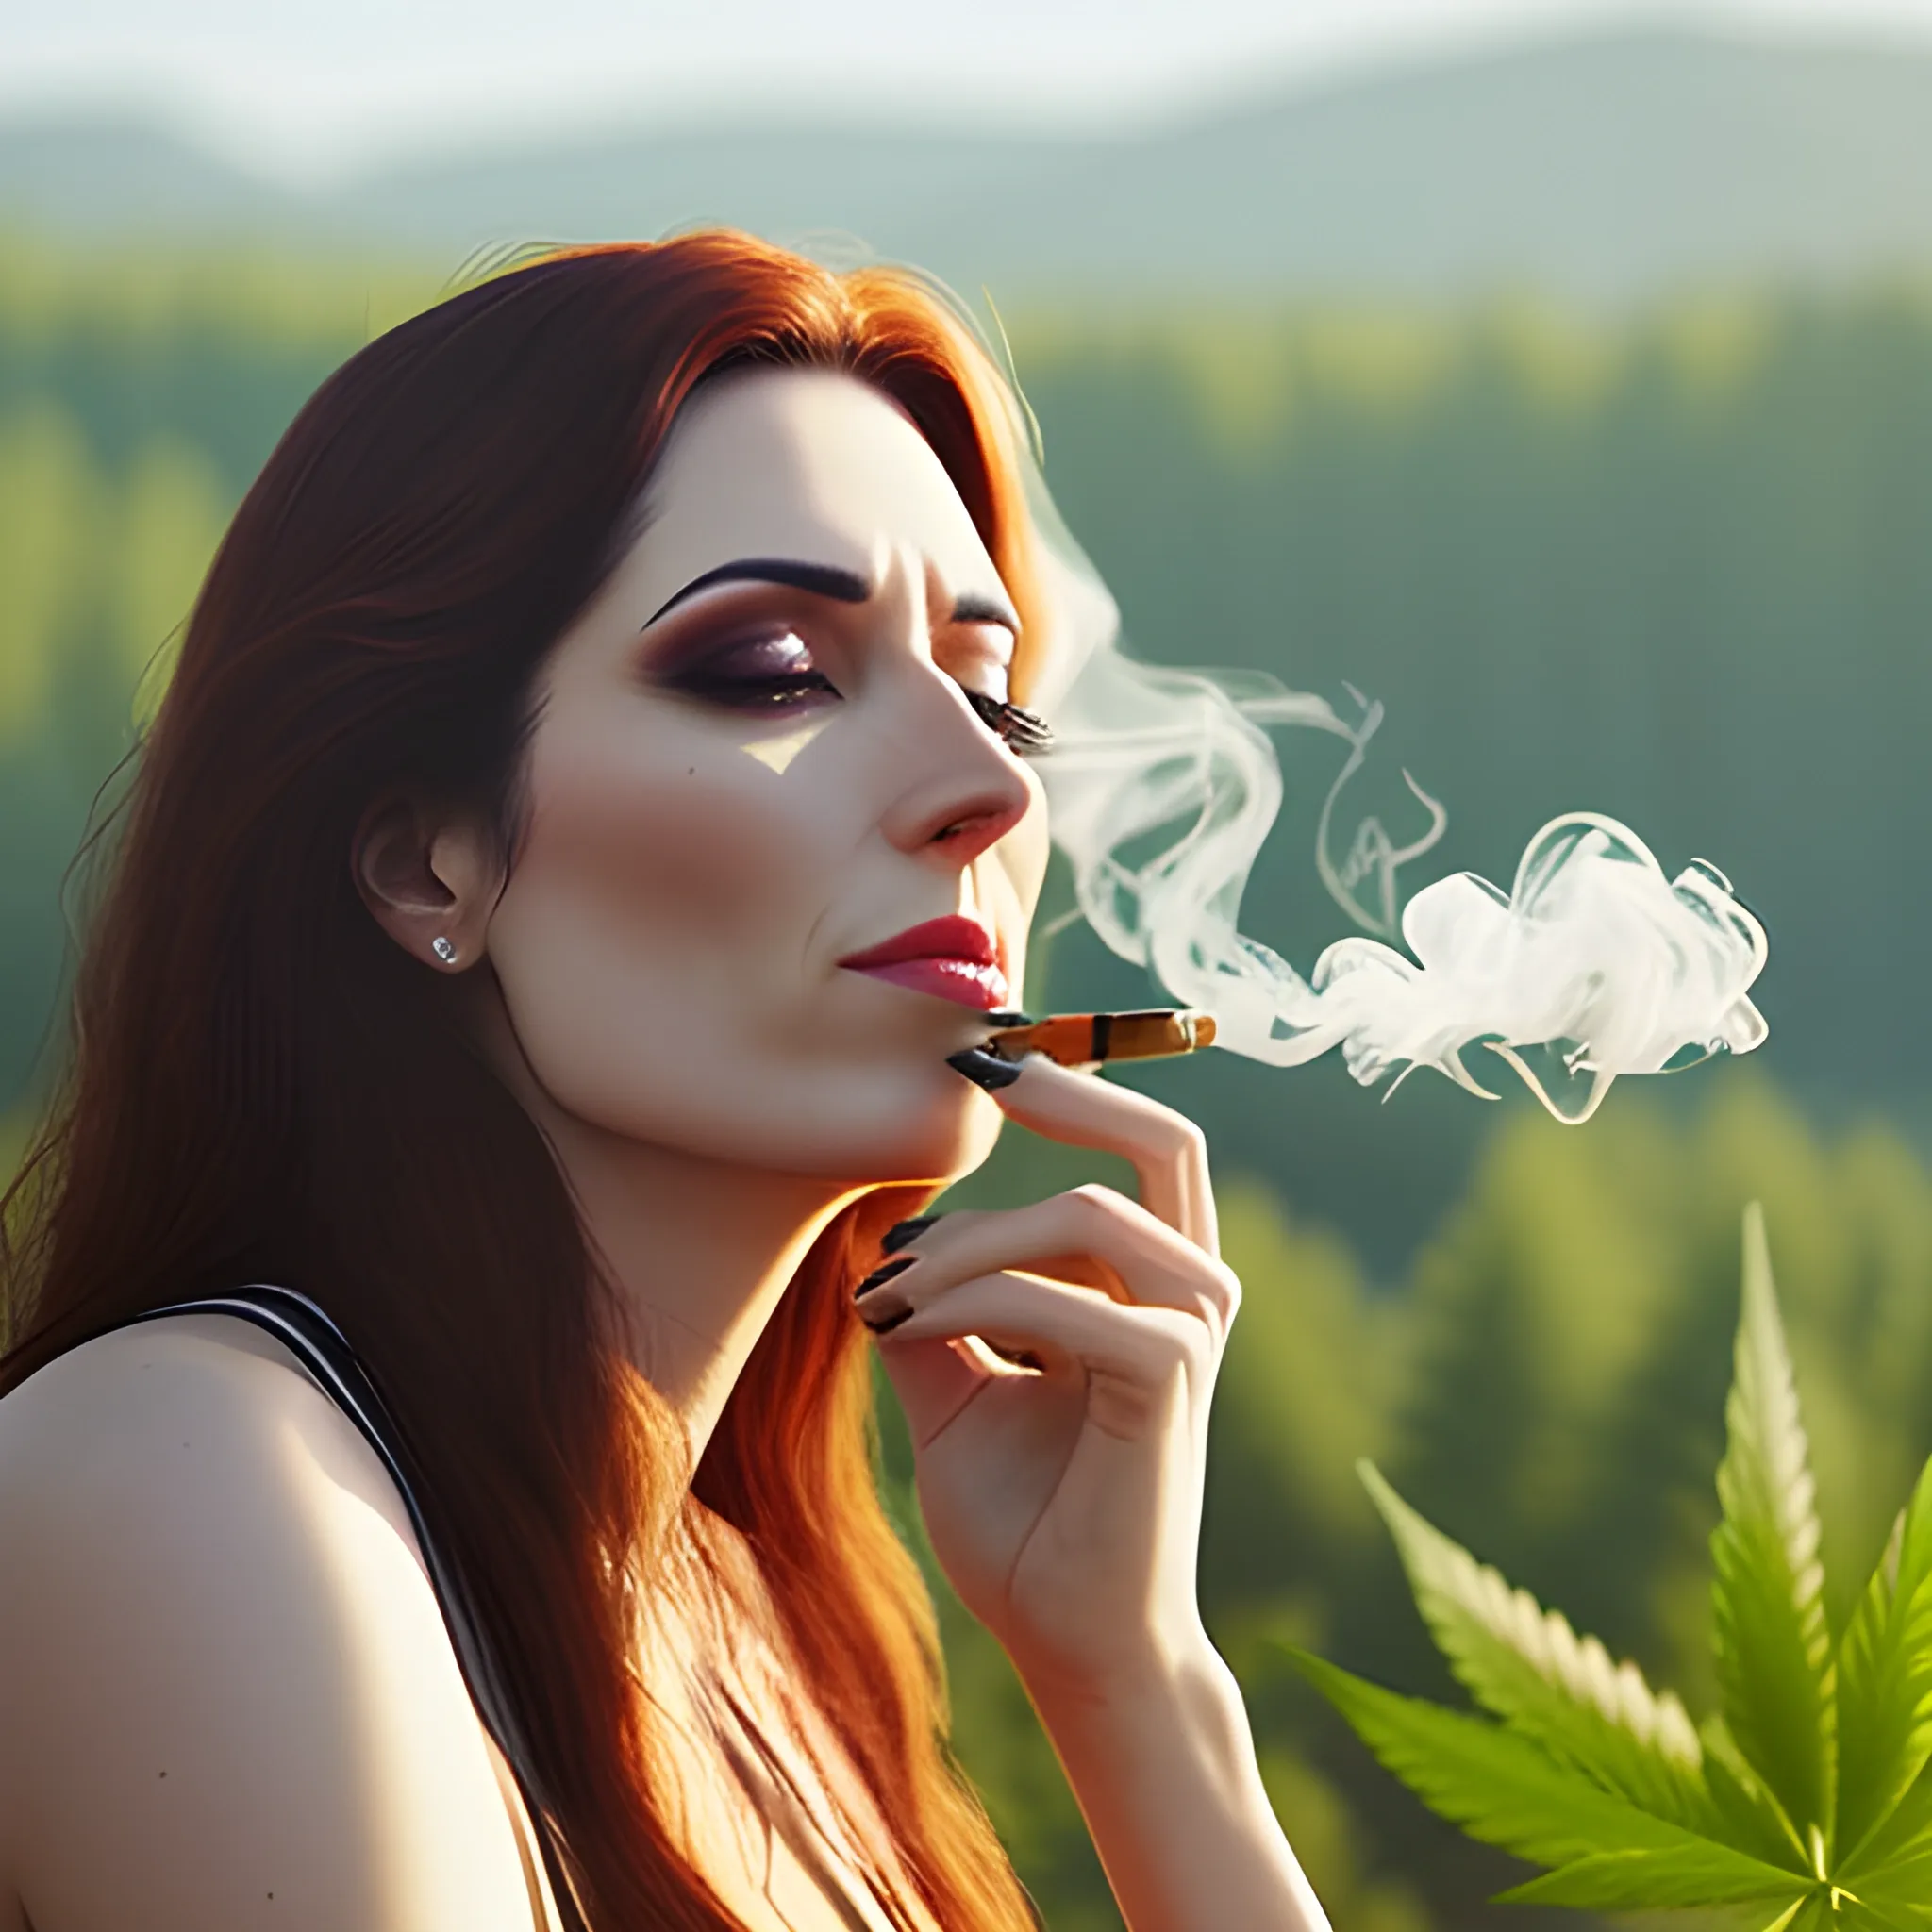 nature, realistic photo, cannabis, high, girl smoking, nice day, detailed
